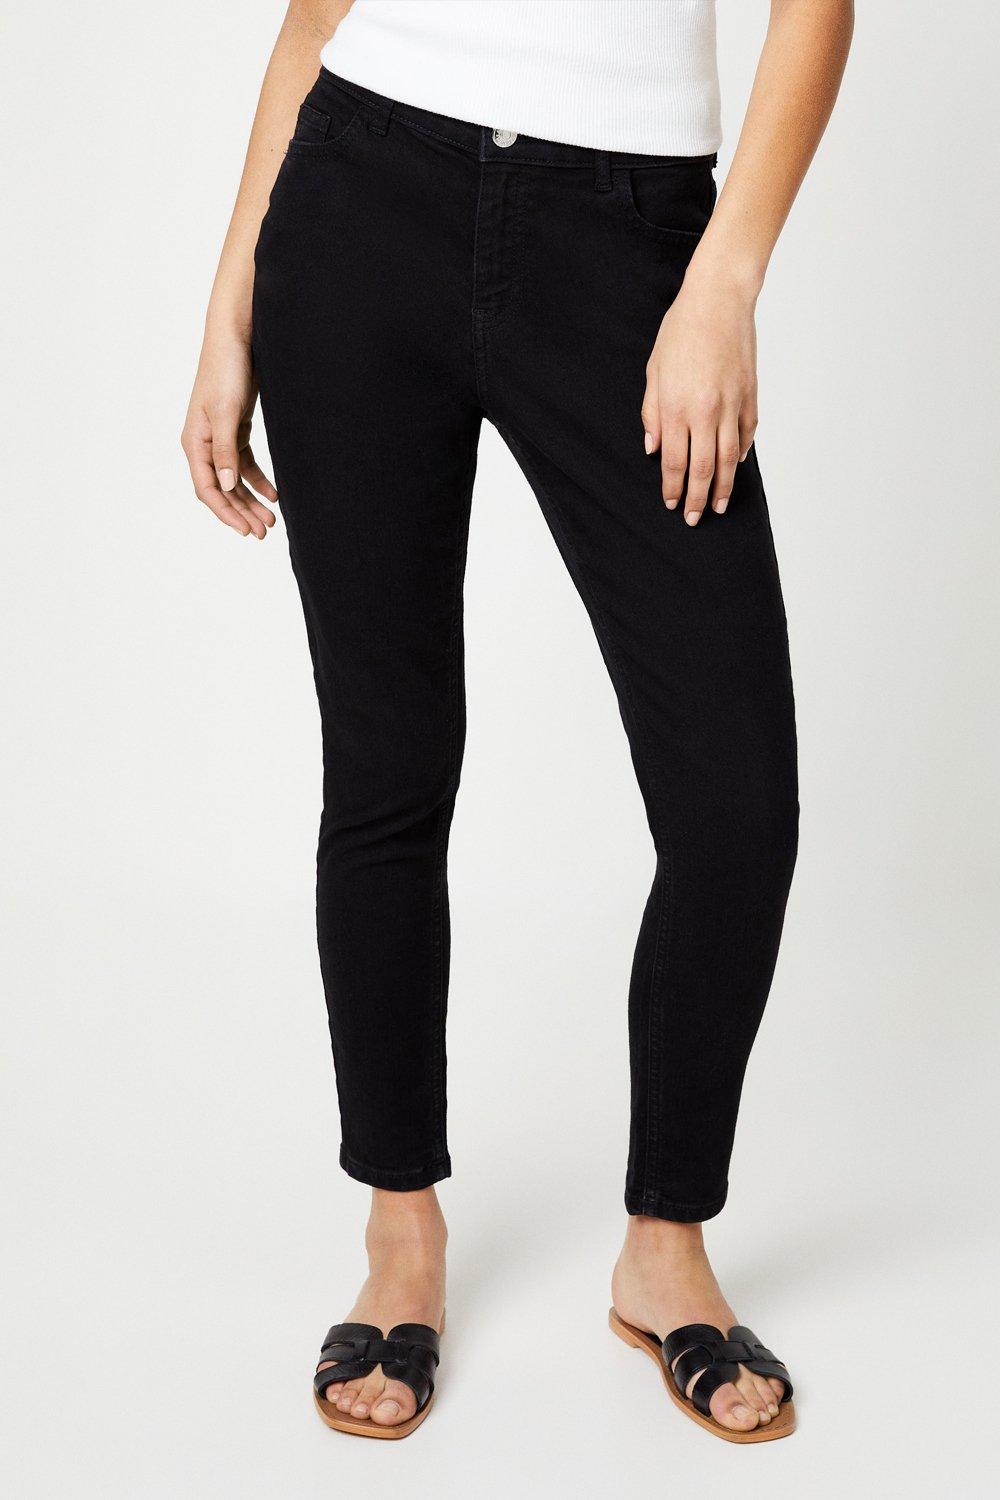 Women's Petite Comfort Stretch Skinny Jeans - black - 14